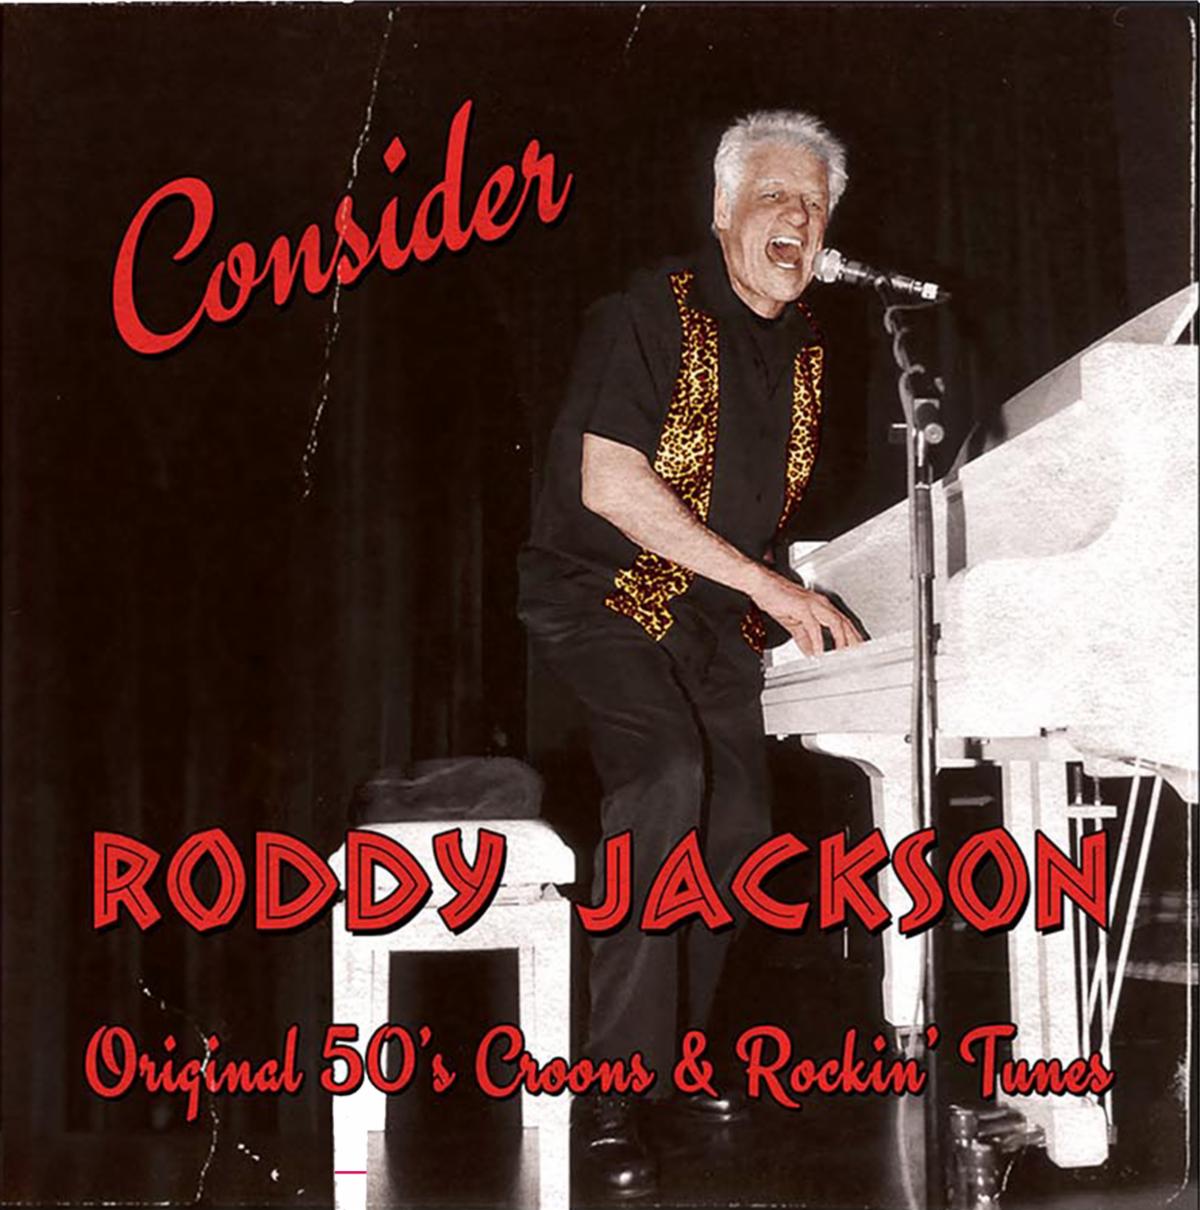 VLV Roddy Jackson CD Front.jpg